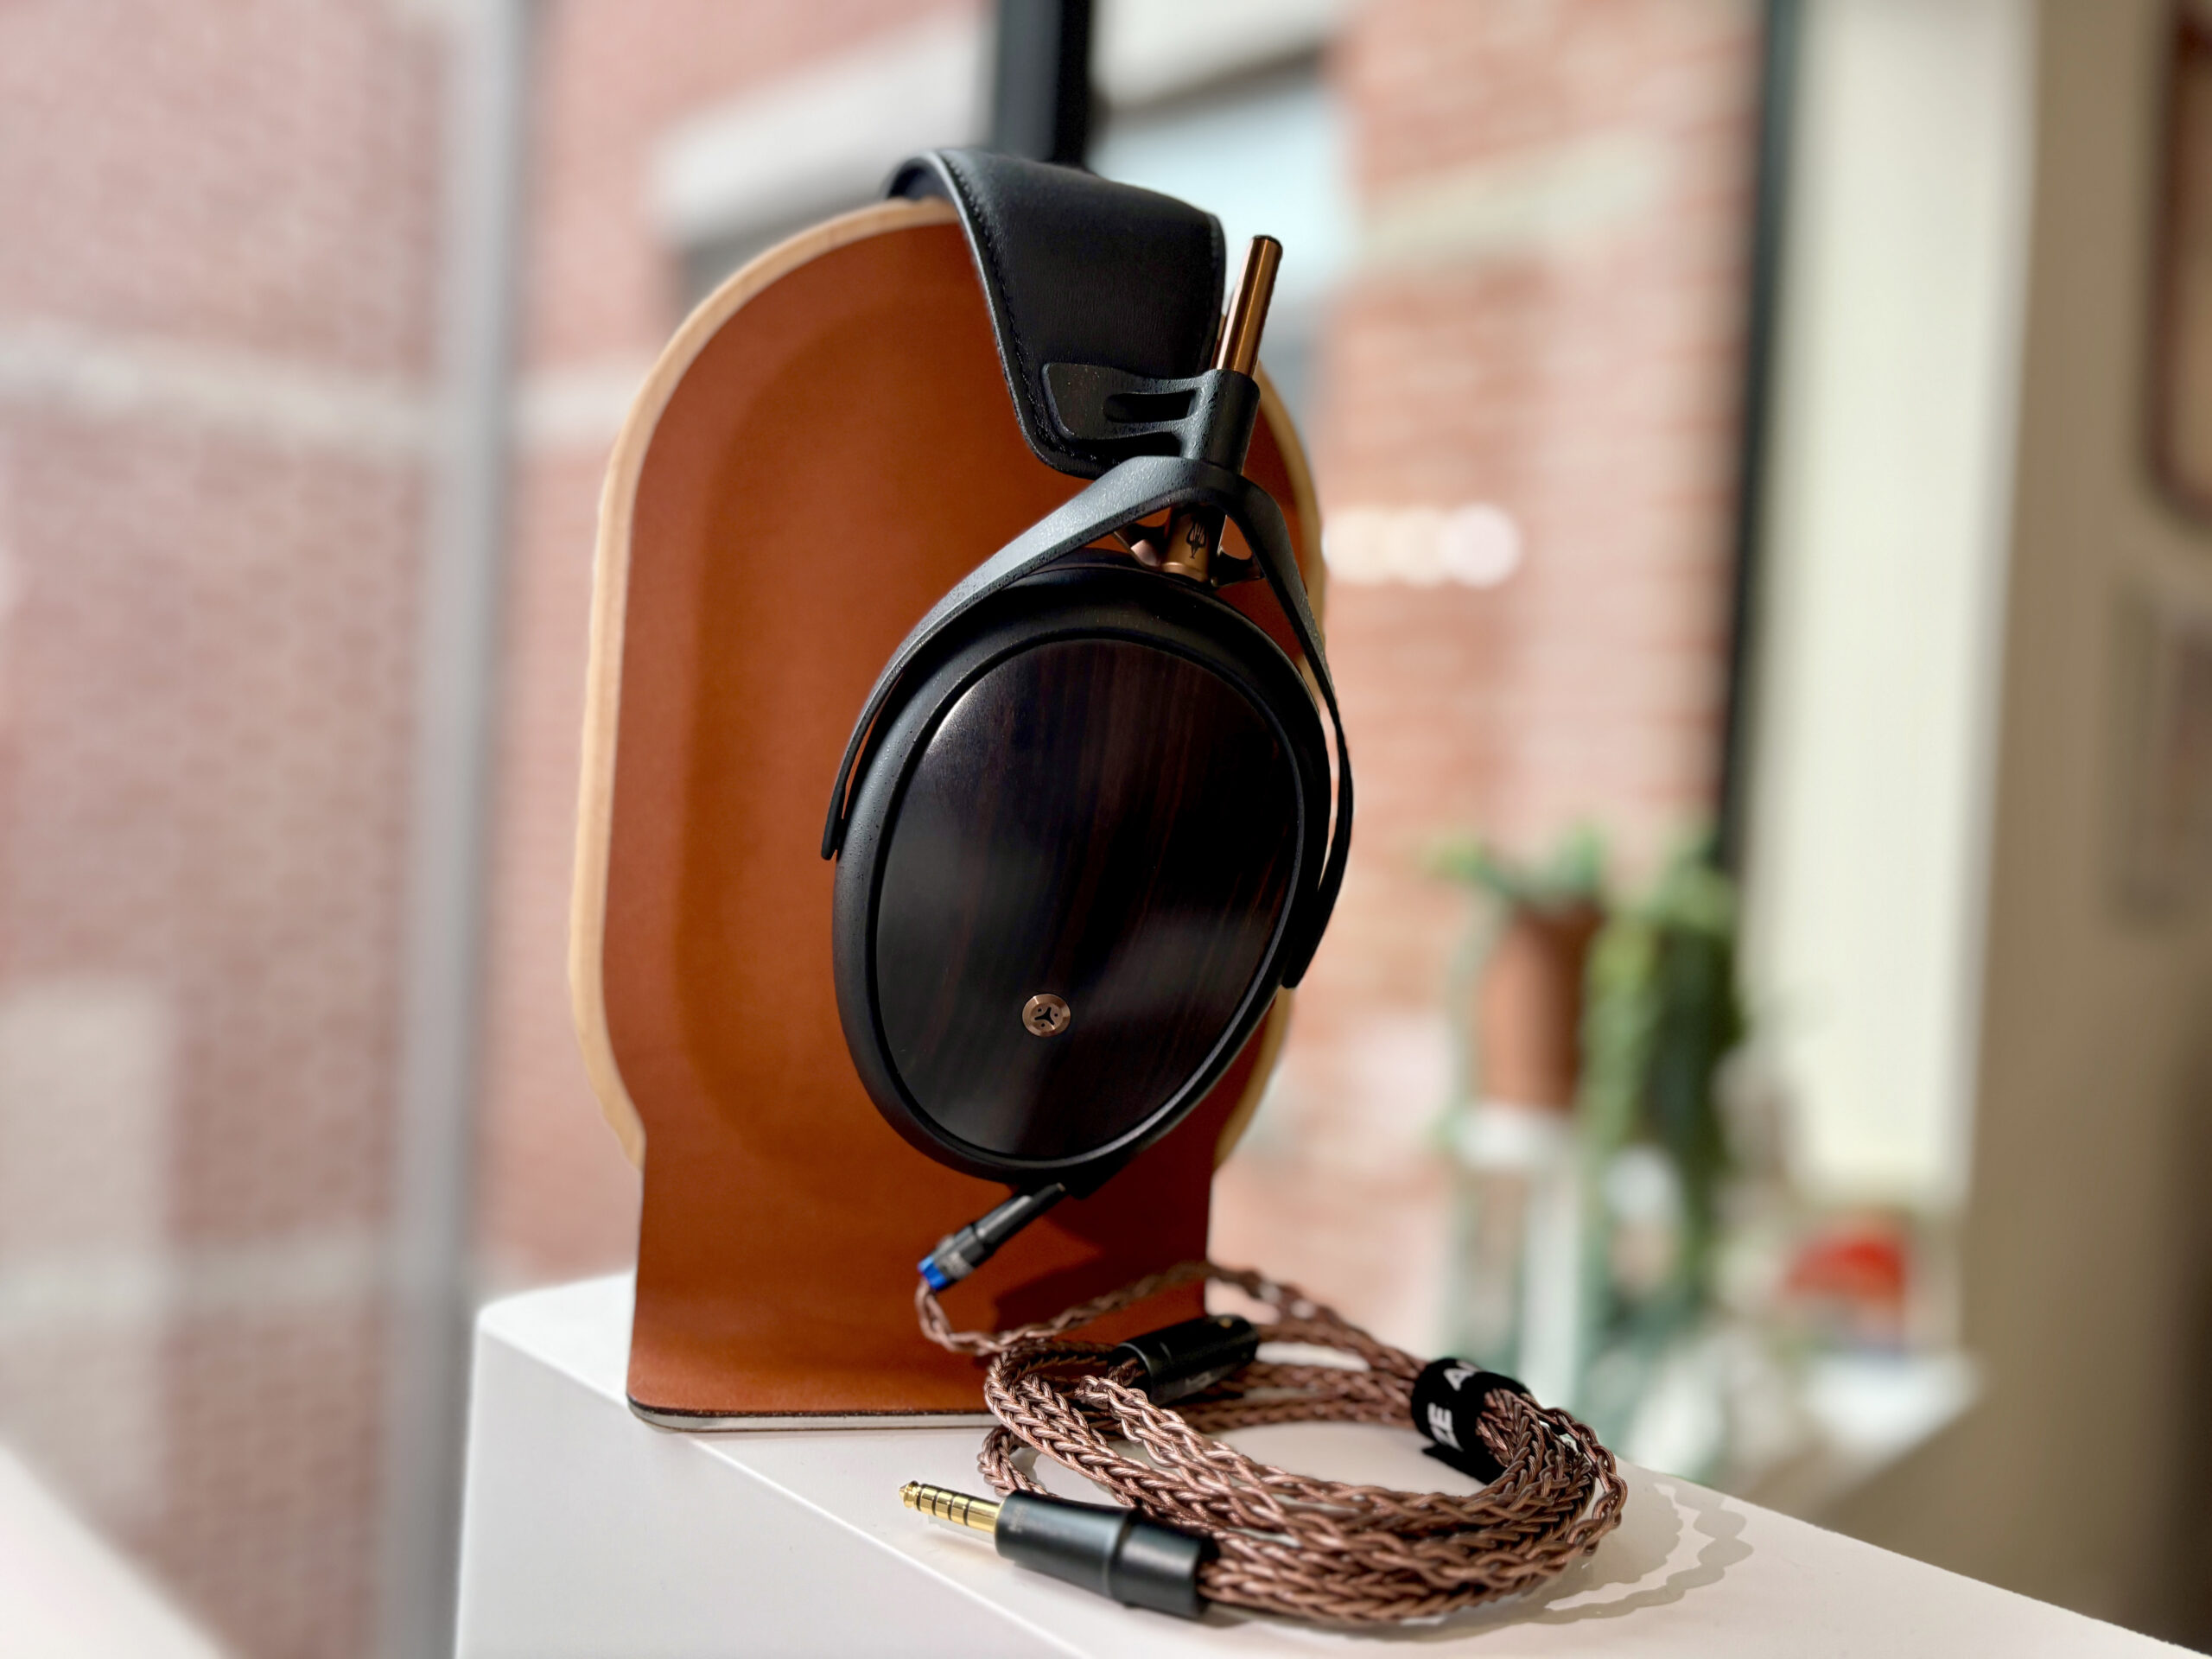 Meze Liric II headphones on a stand.